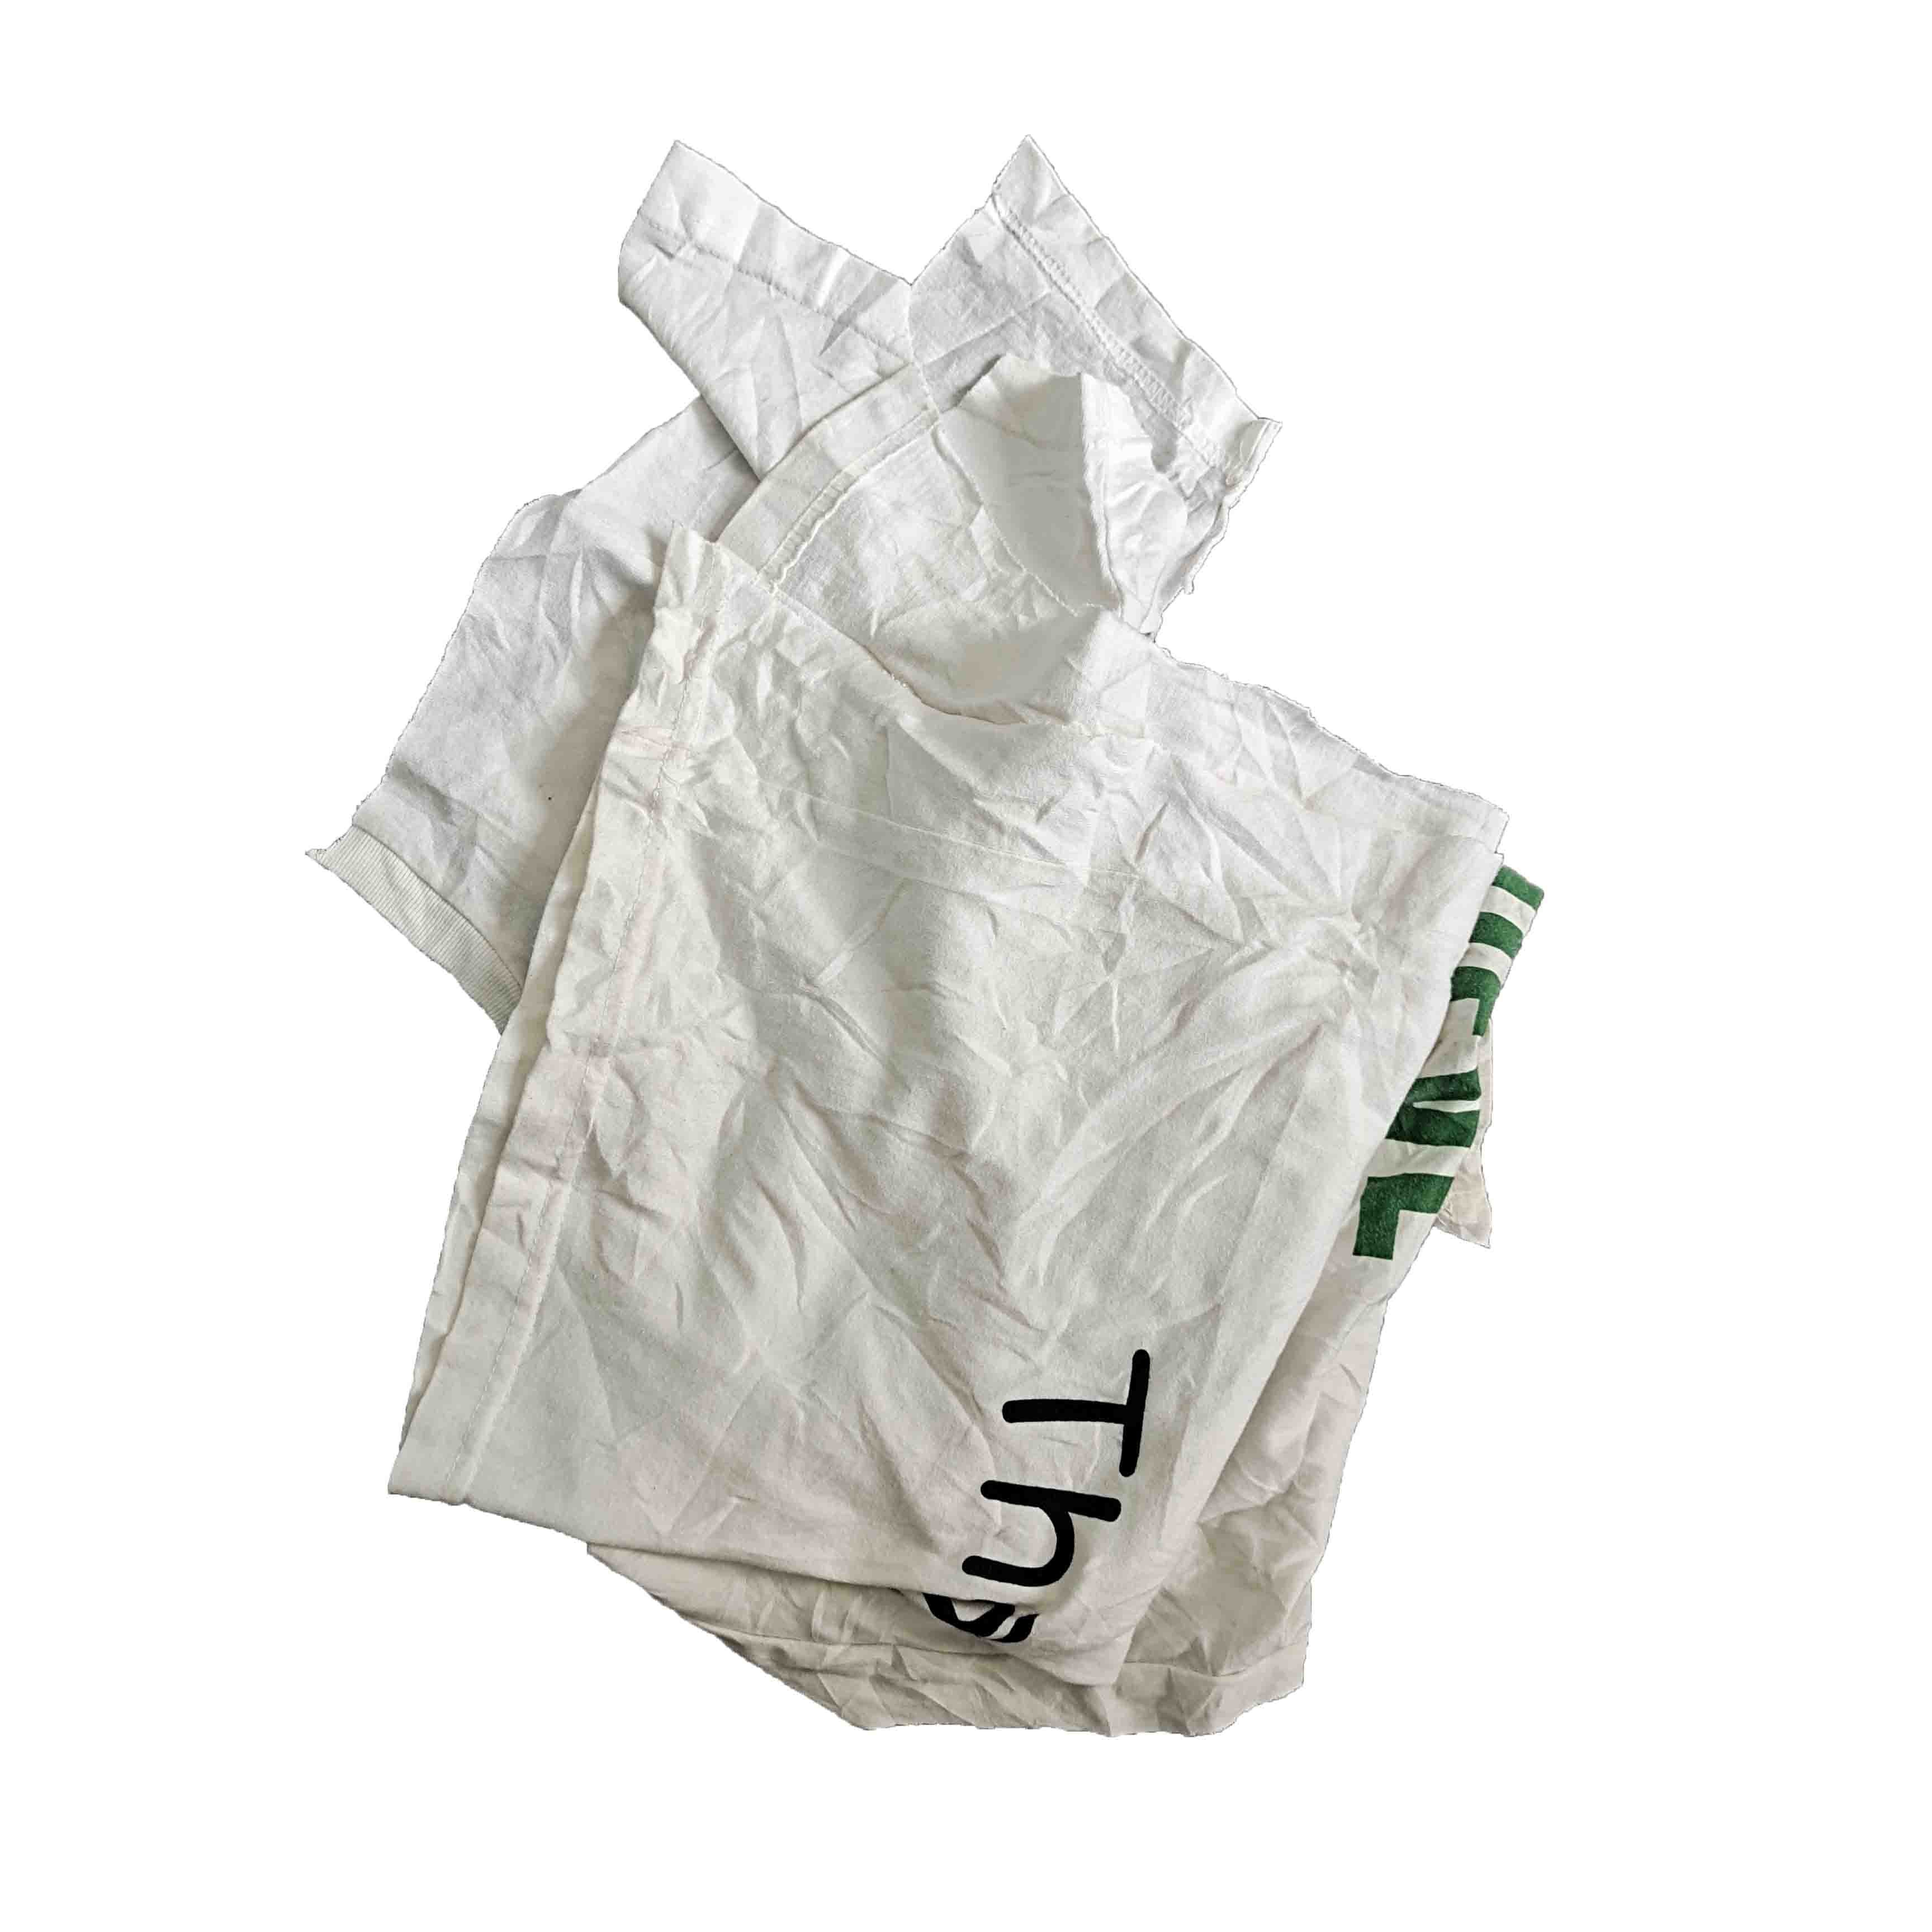 2kg/bale White T Shirt Rags